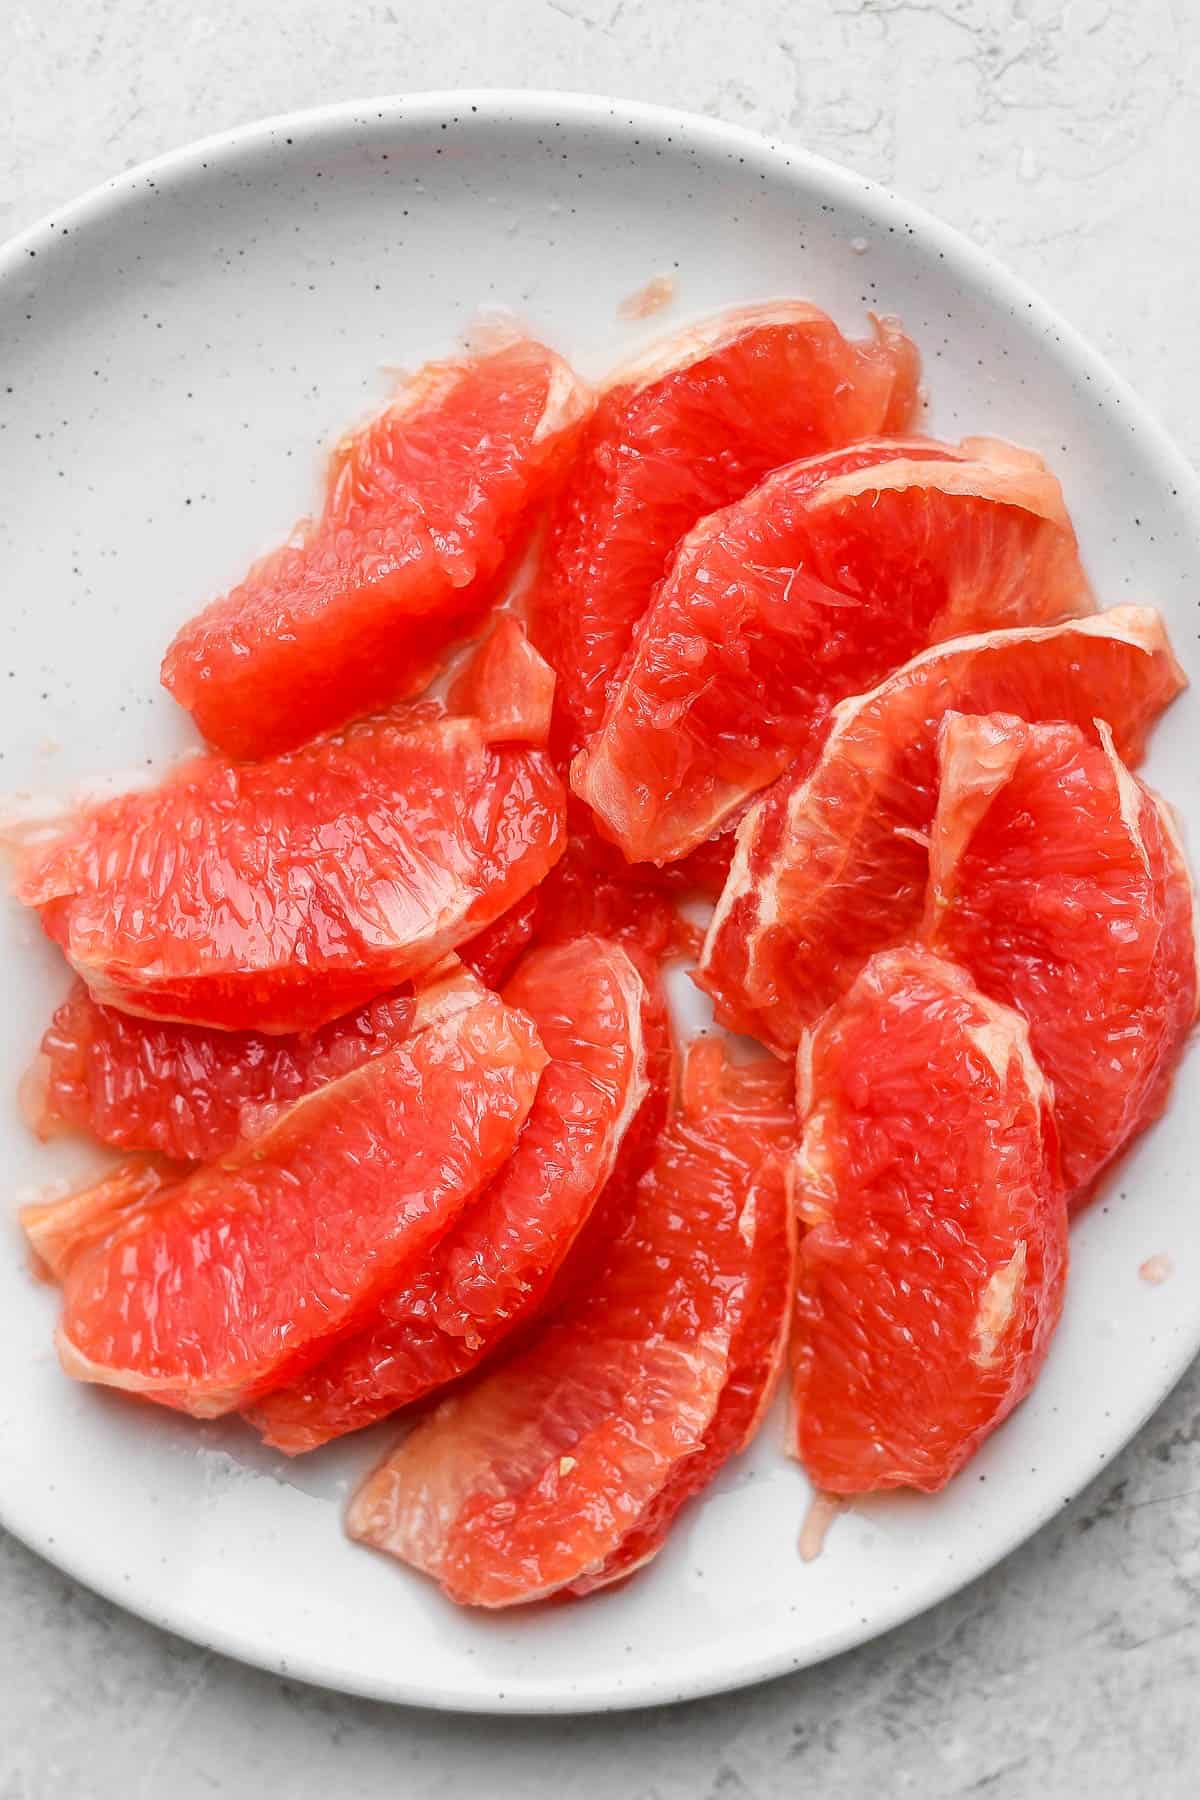 Segmented grapefruit on a white plate